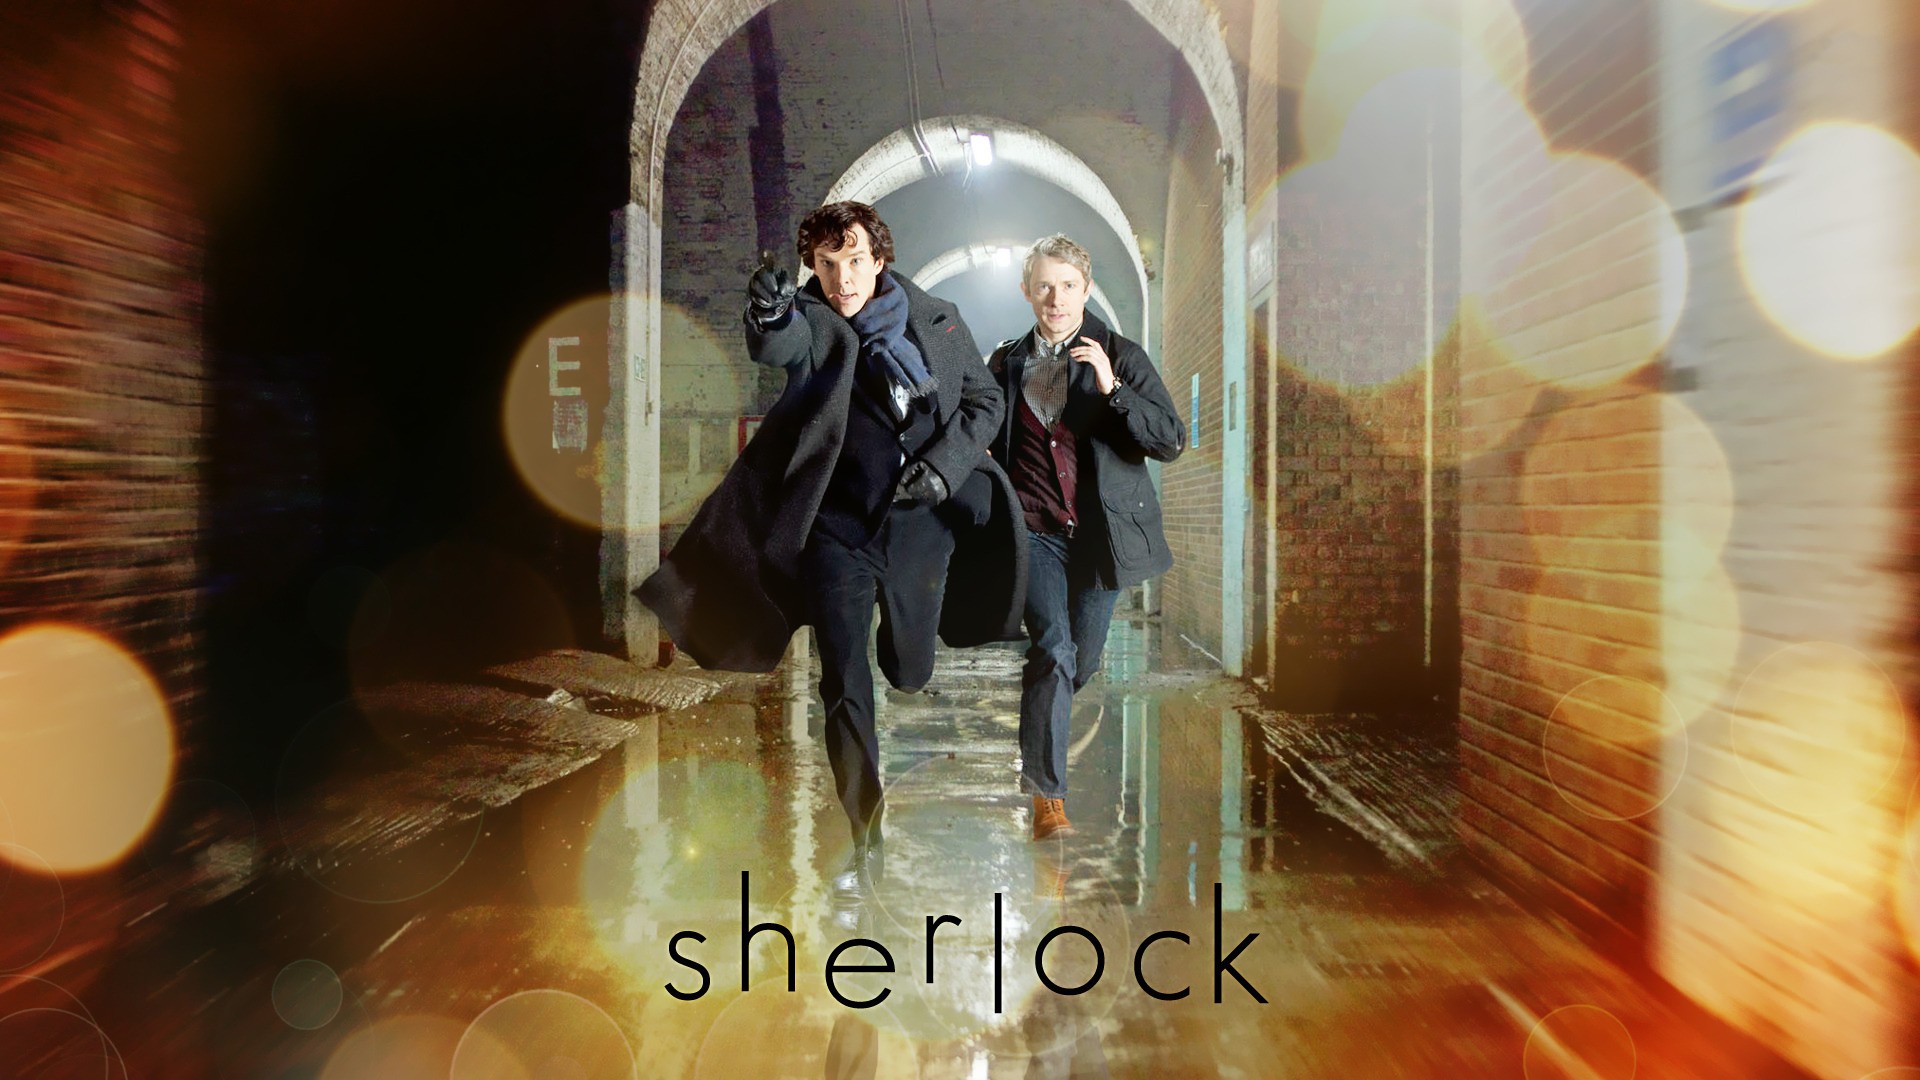 Sherlock Wallpaper Pictures Image